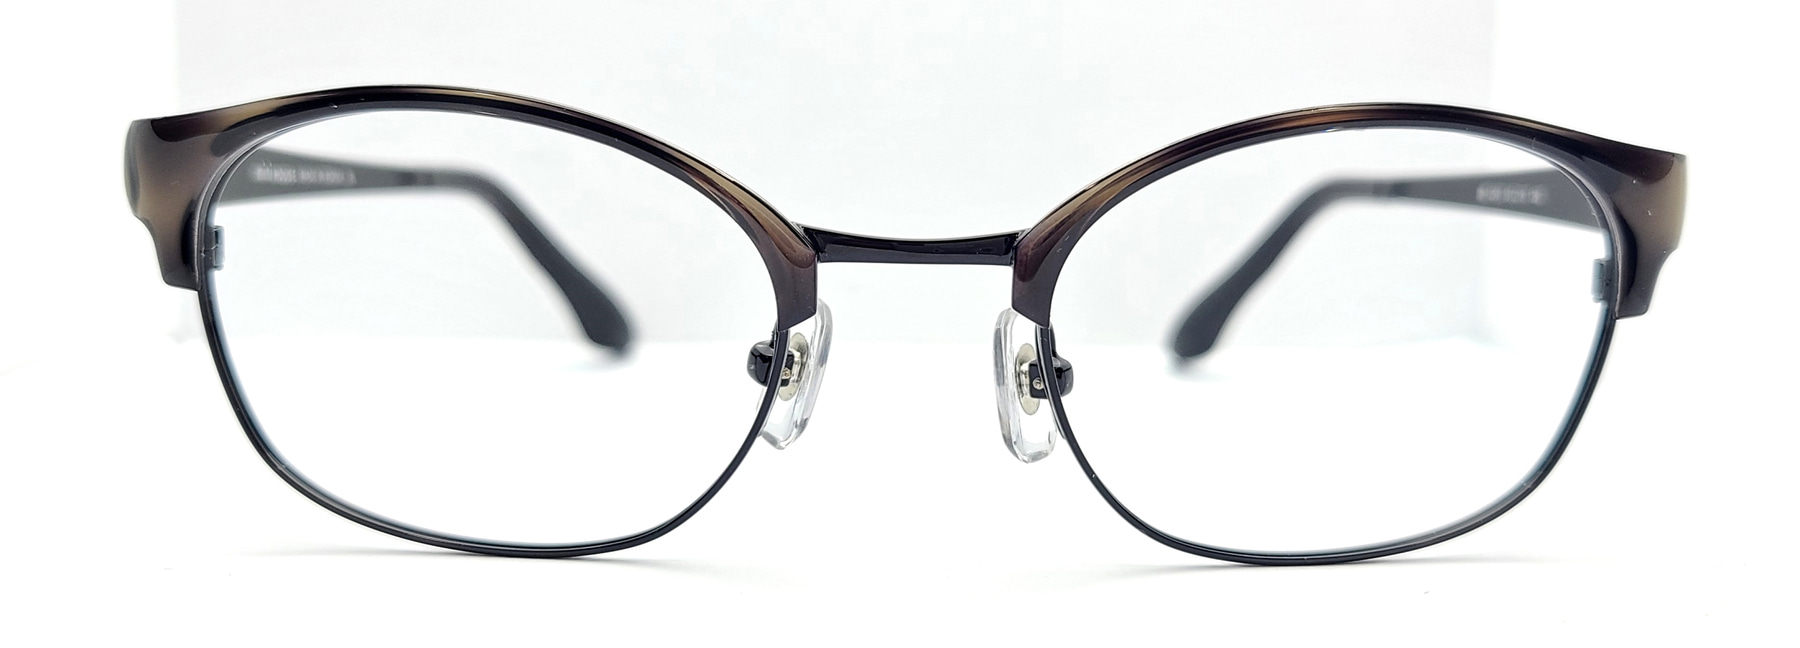 MINIHOUSE M-1250, Korean glasses, sunglasses, eyeglasses, glasses